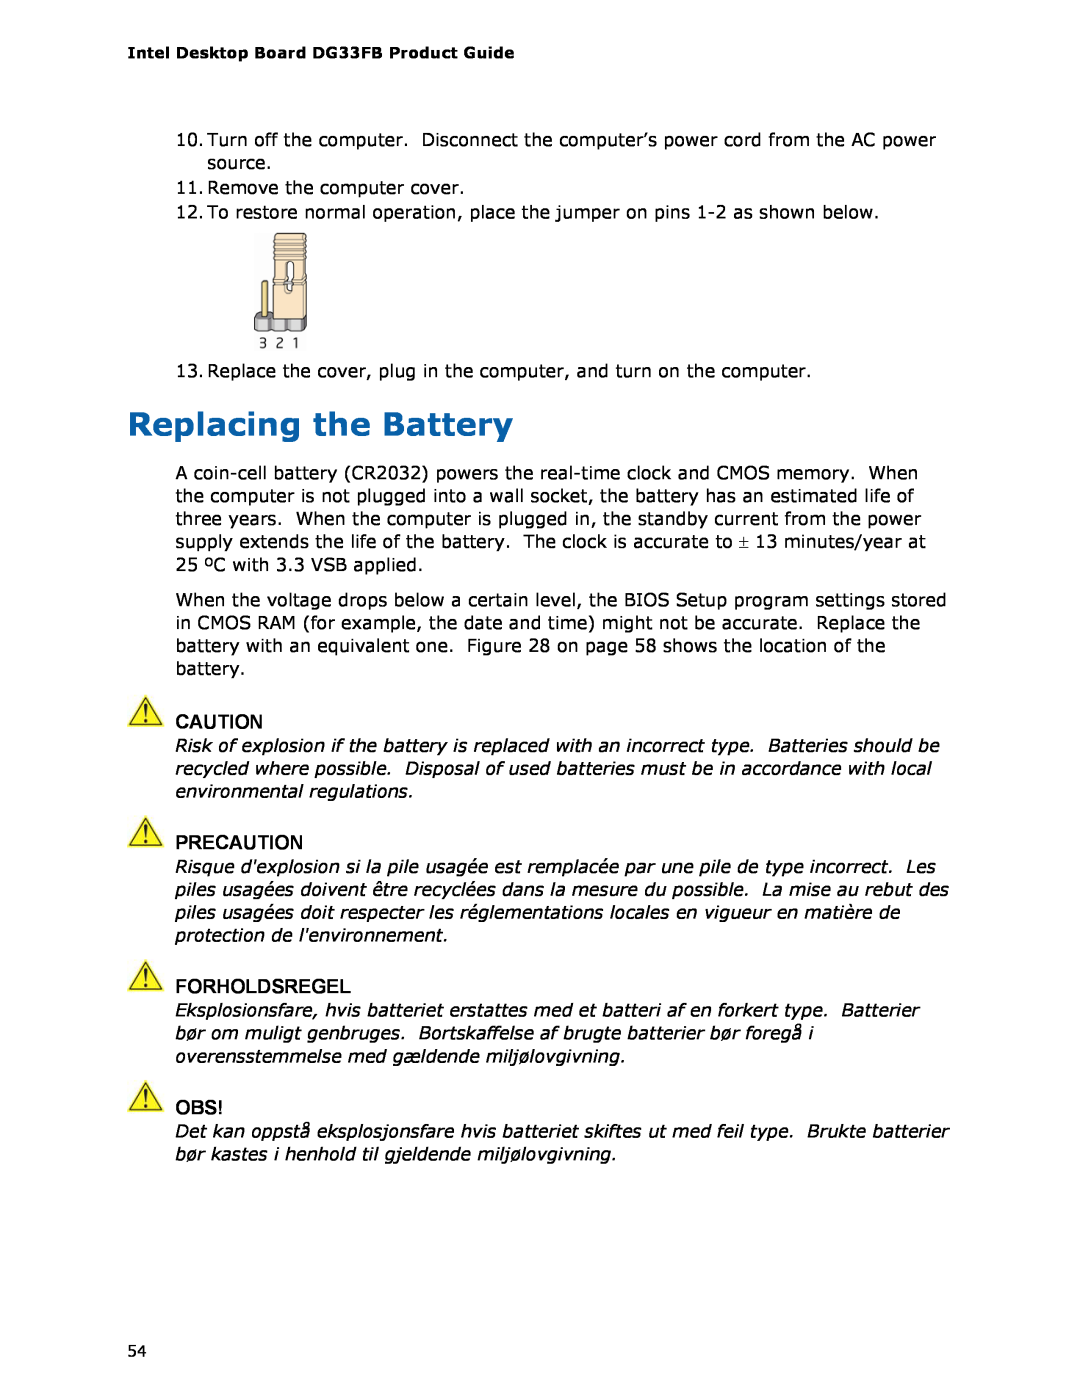 Intel DG33FB manual Replacing the Battery, Precaution, Forholdsregel 